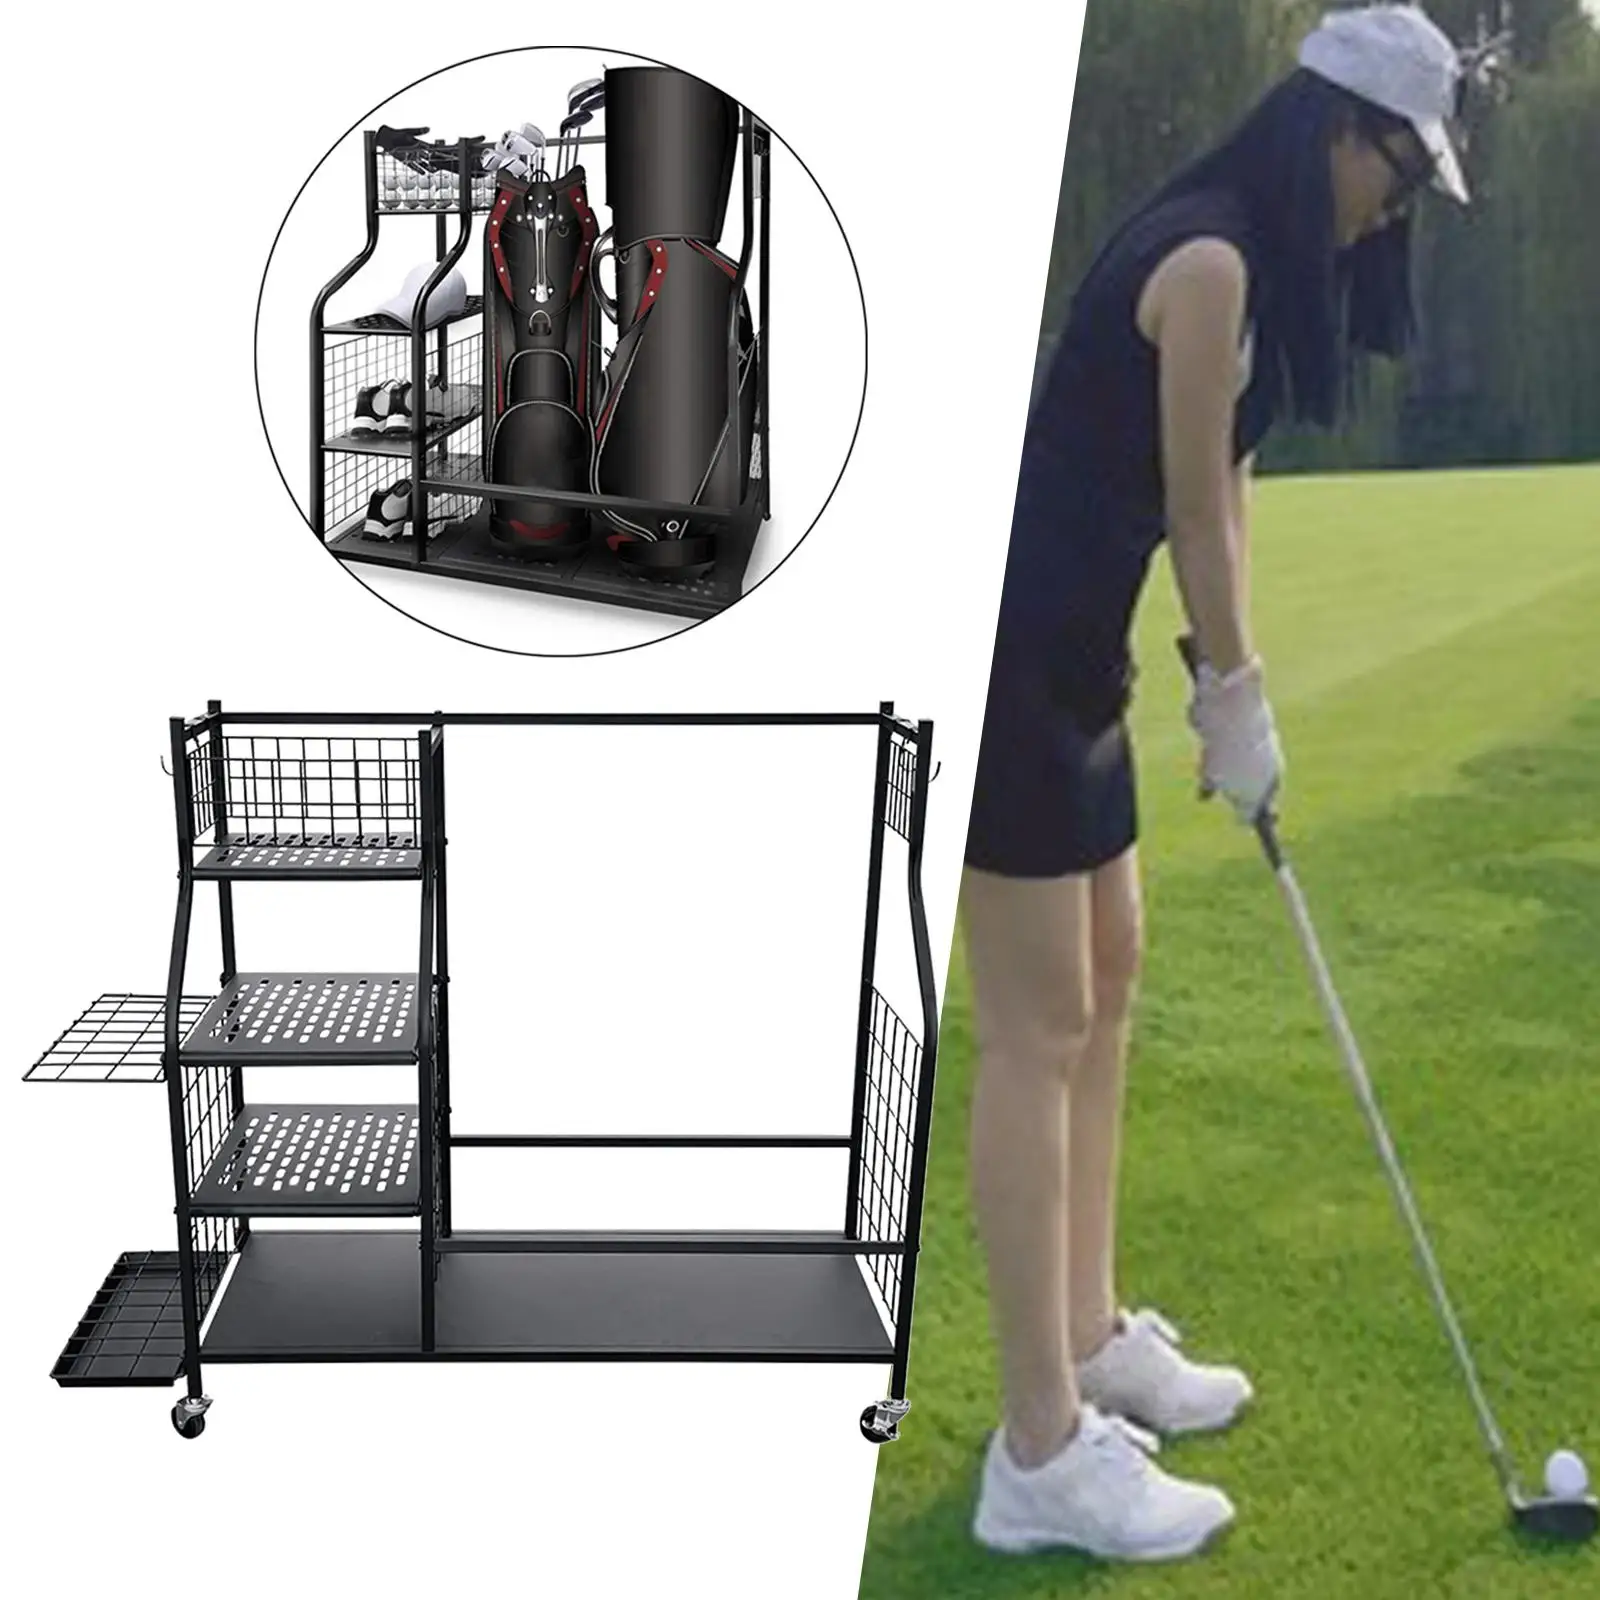 

Golf Bag Storage Rack Golf Storage Garage Organizer Golf Bag Organizer Extra Large Wheels for Golf Clubs Organization Gadgets